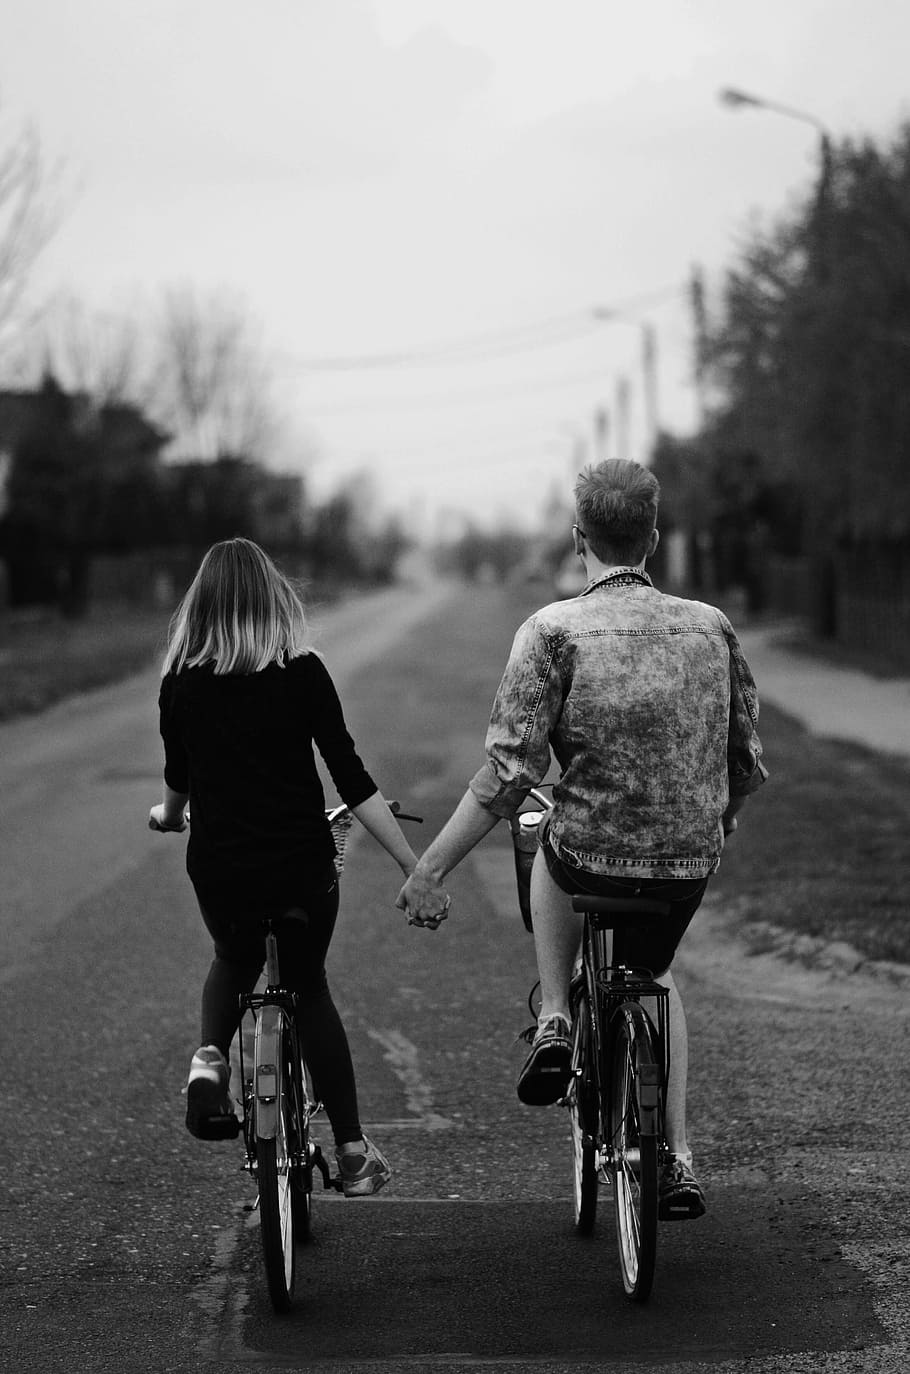 Hd Wallpaper Lovers Bike Ride Man And Woman Biking While Holding